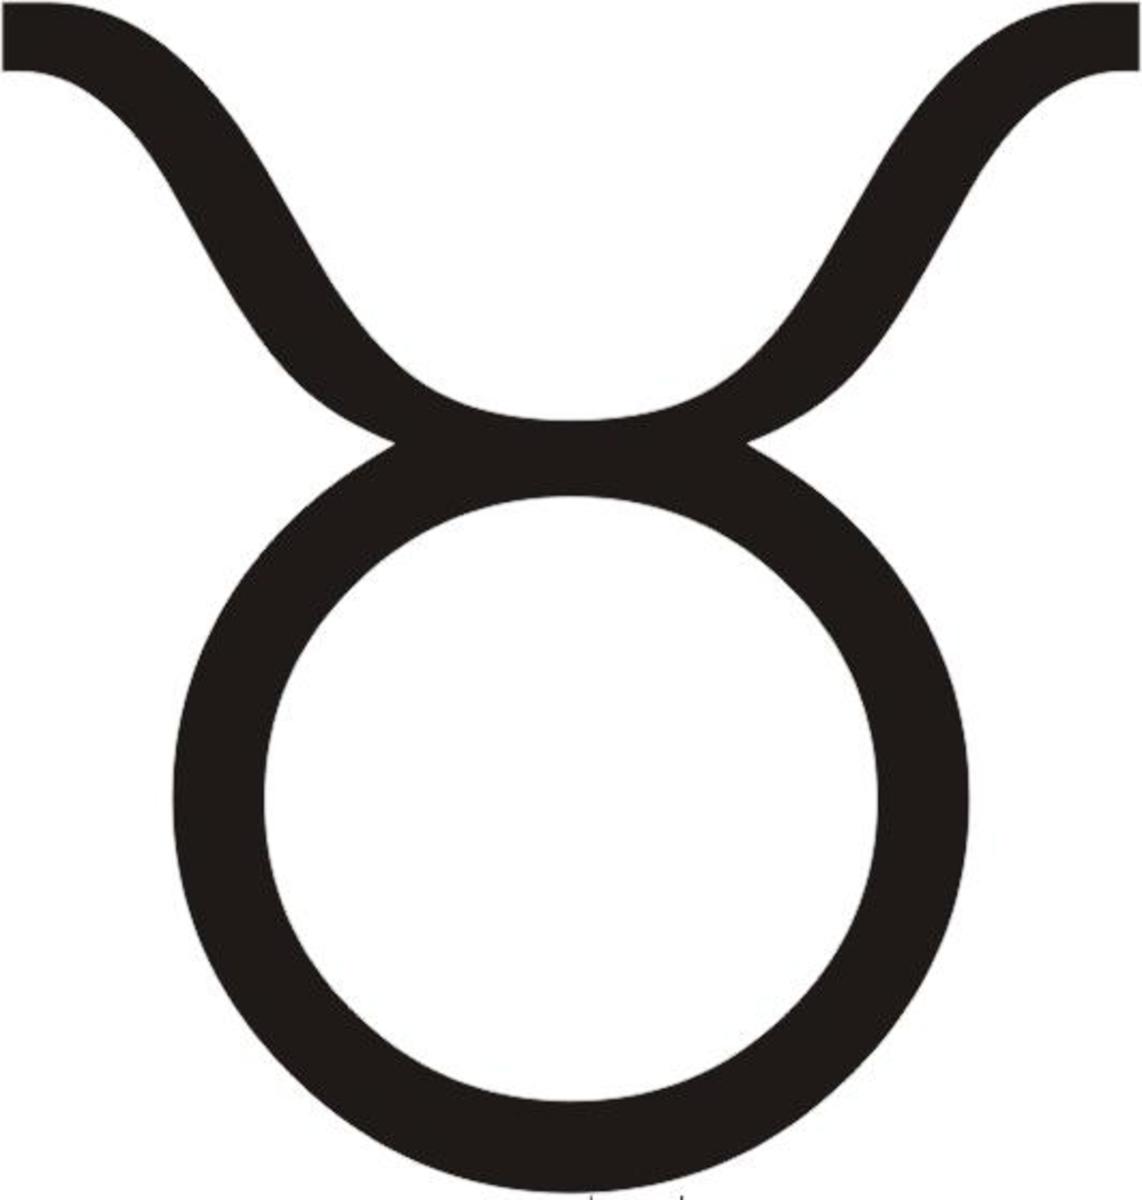 The Taurus glyph. The bull symbolizes the zodiac sign Taurus.